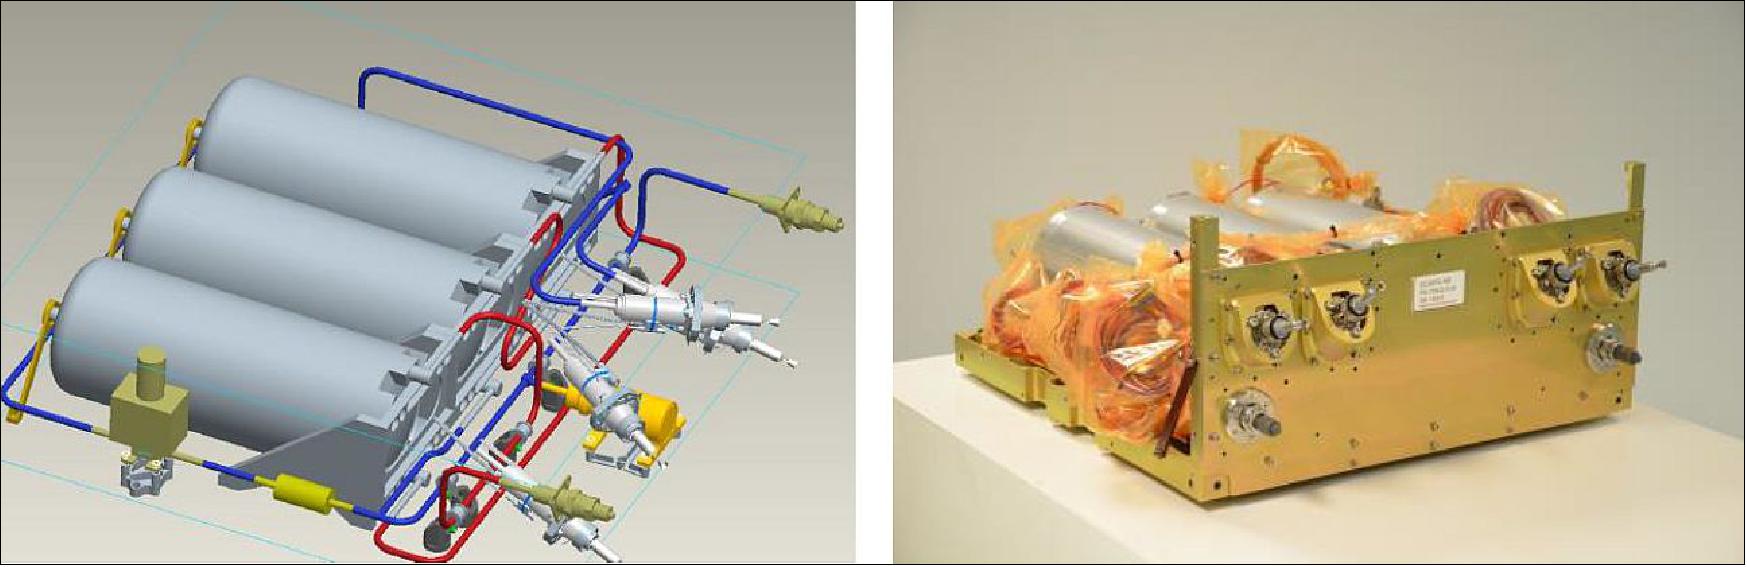 Figure 40: Left: The SkySat HPGP system layout; right: The SkySat-3 HPGP flight system (image credit: ECAPS/SSC)